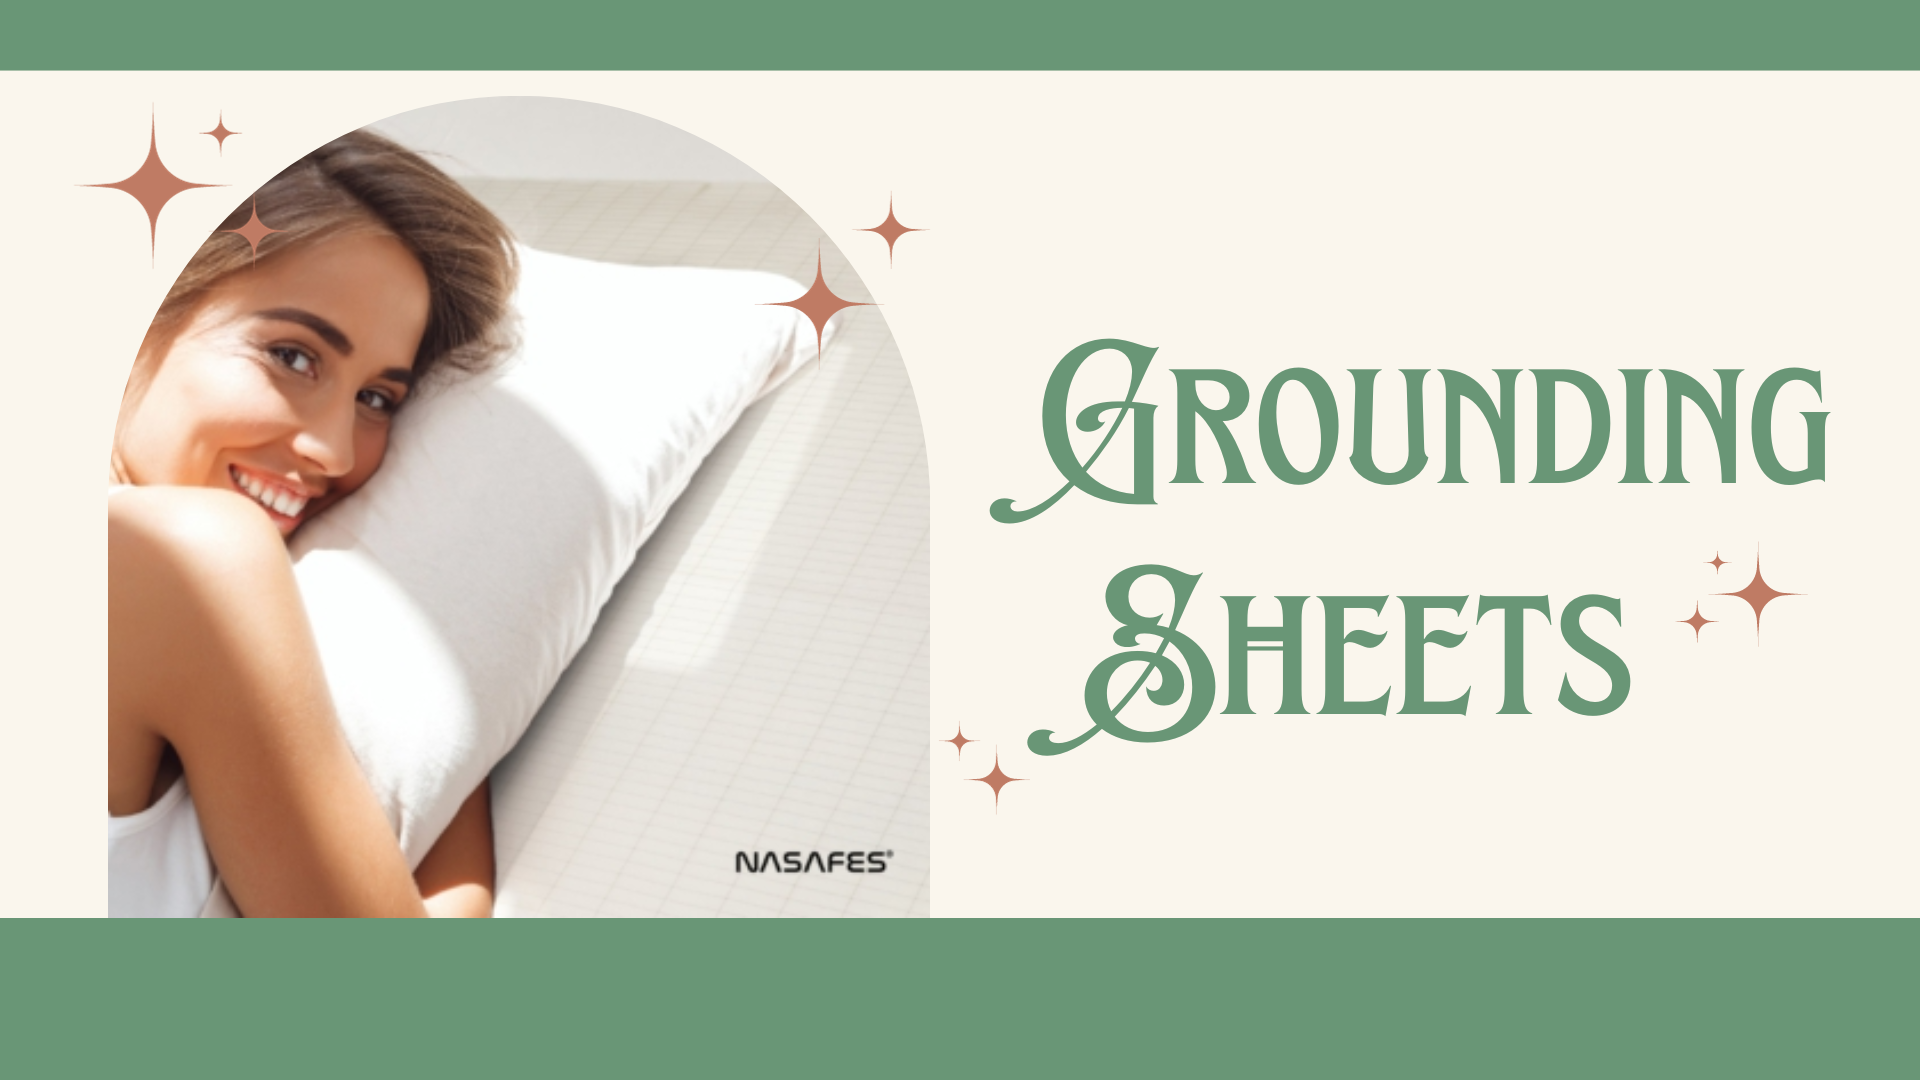 Grounding Sheets